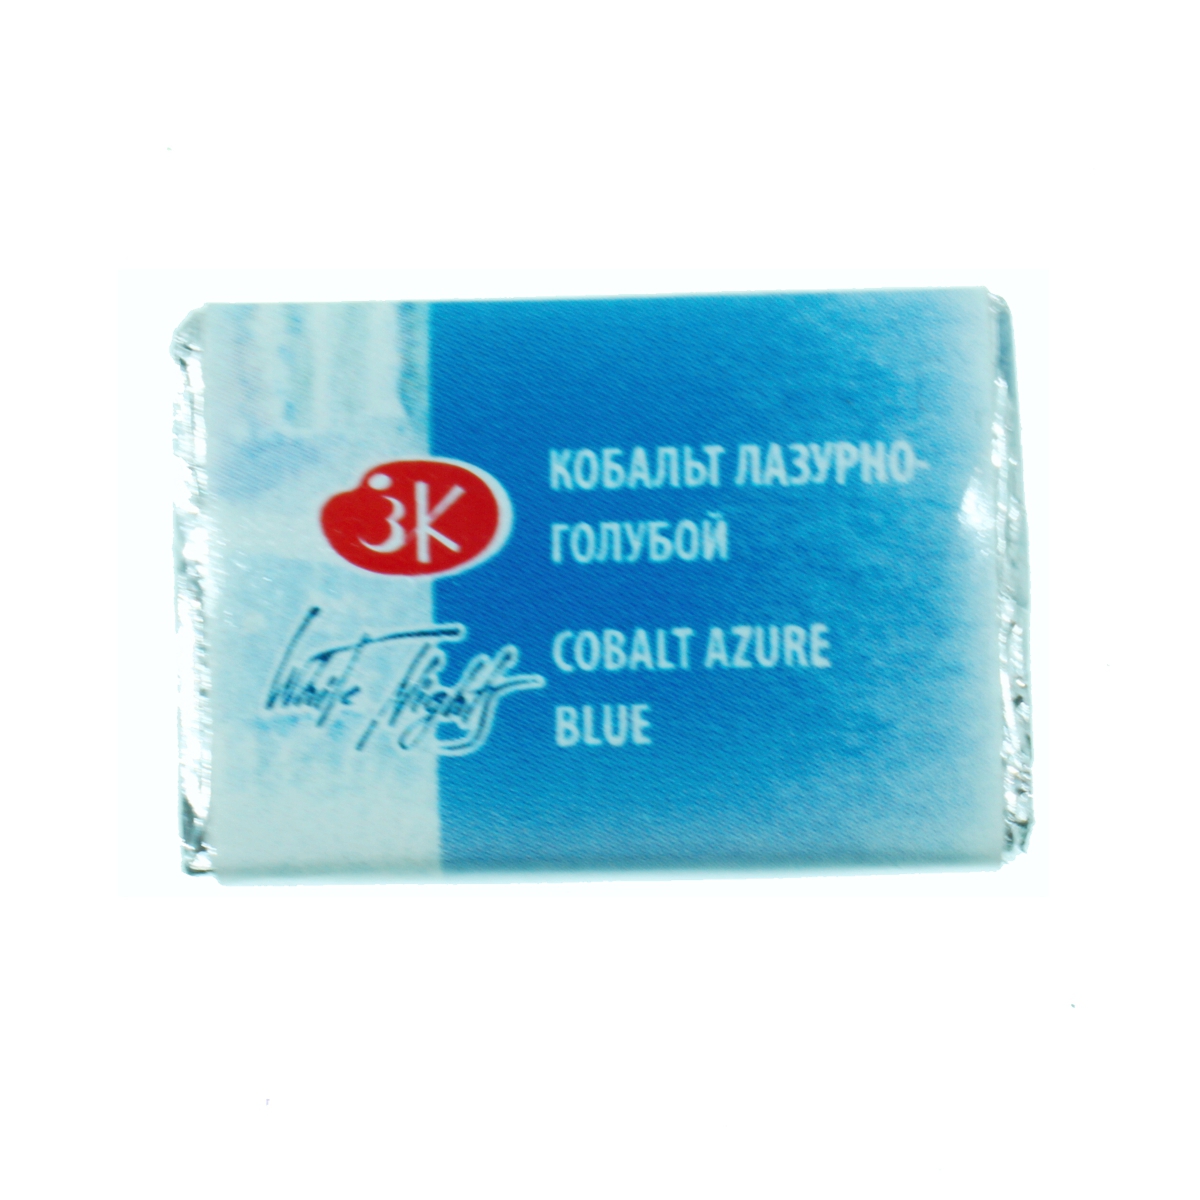 Acuarela ruseasca White Night pastila 2 5ml Nevskaya Palitra albastru cobalt 532